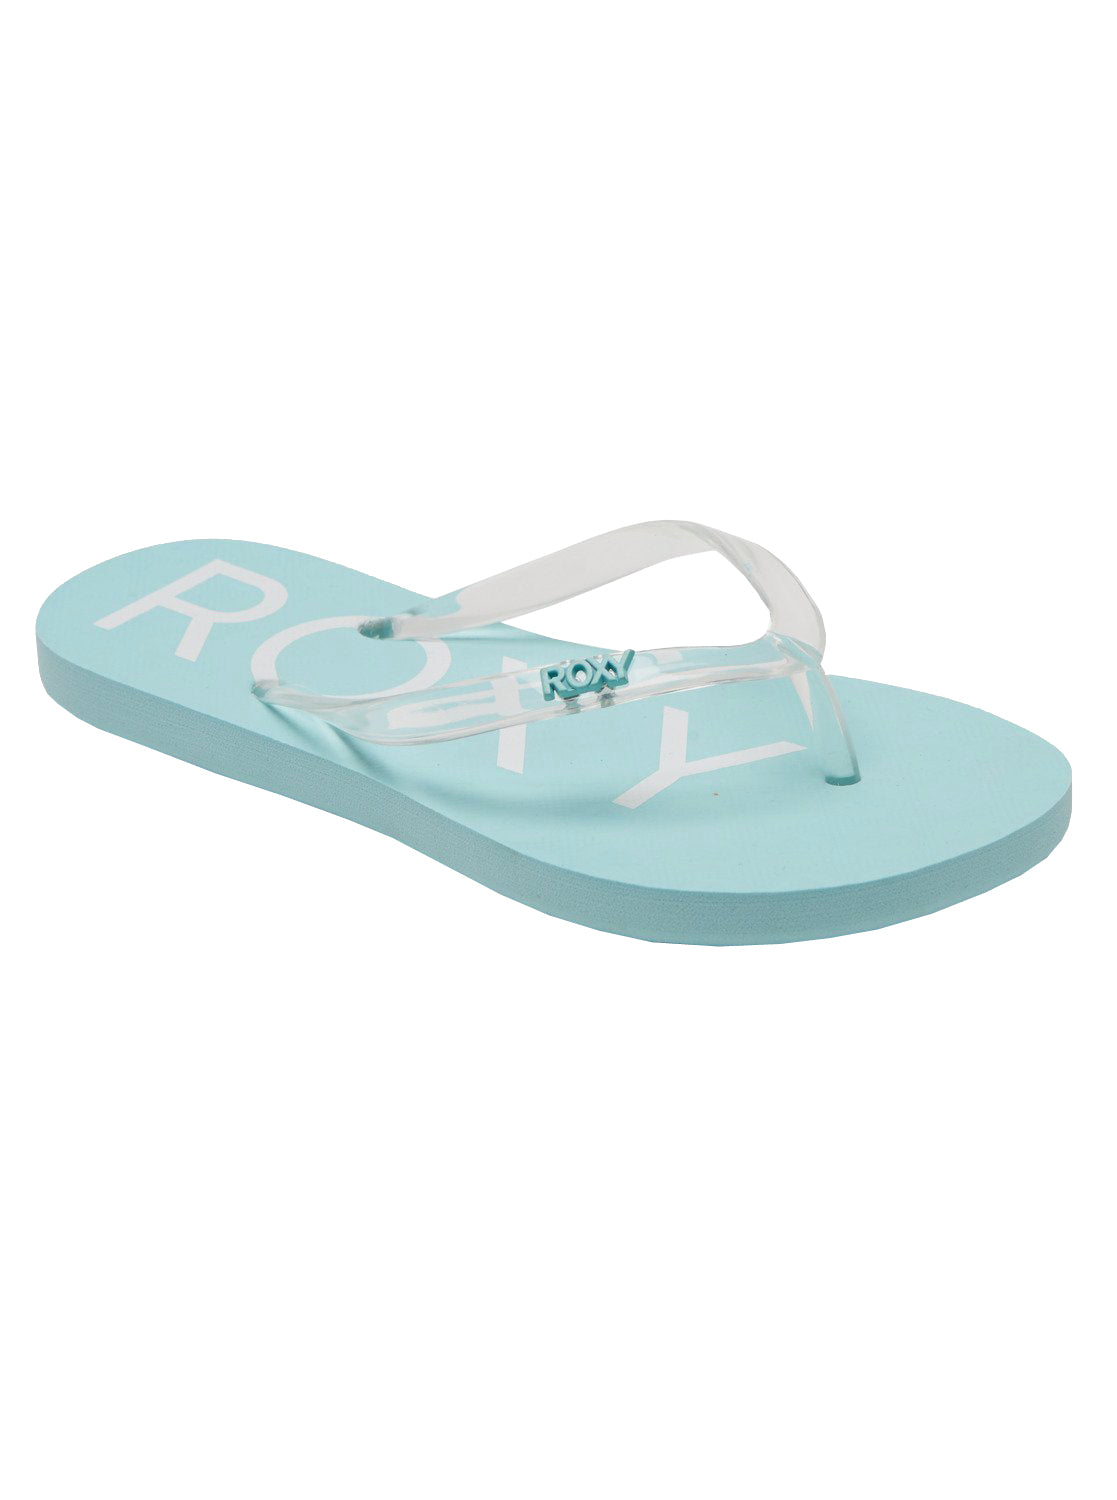 Roxy Viva Jelly Girls Sandal AQA-Aqua 12 C